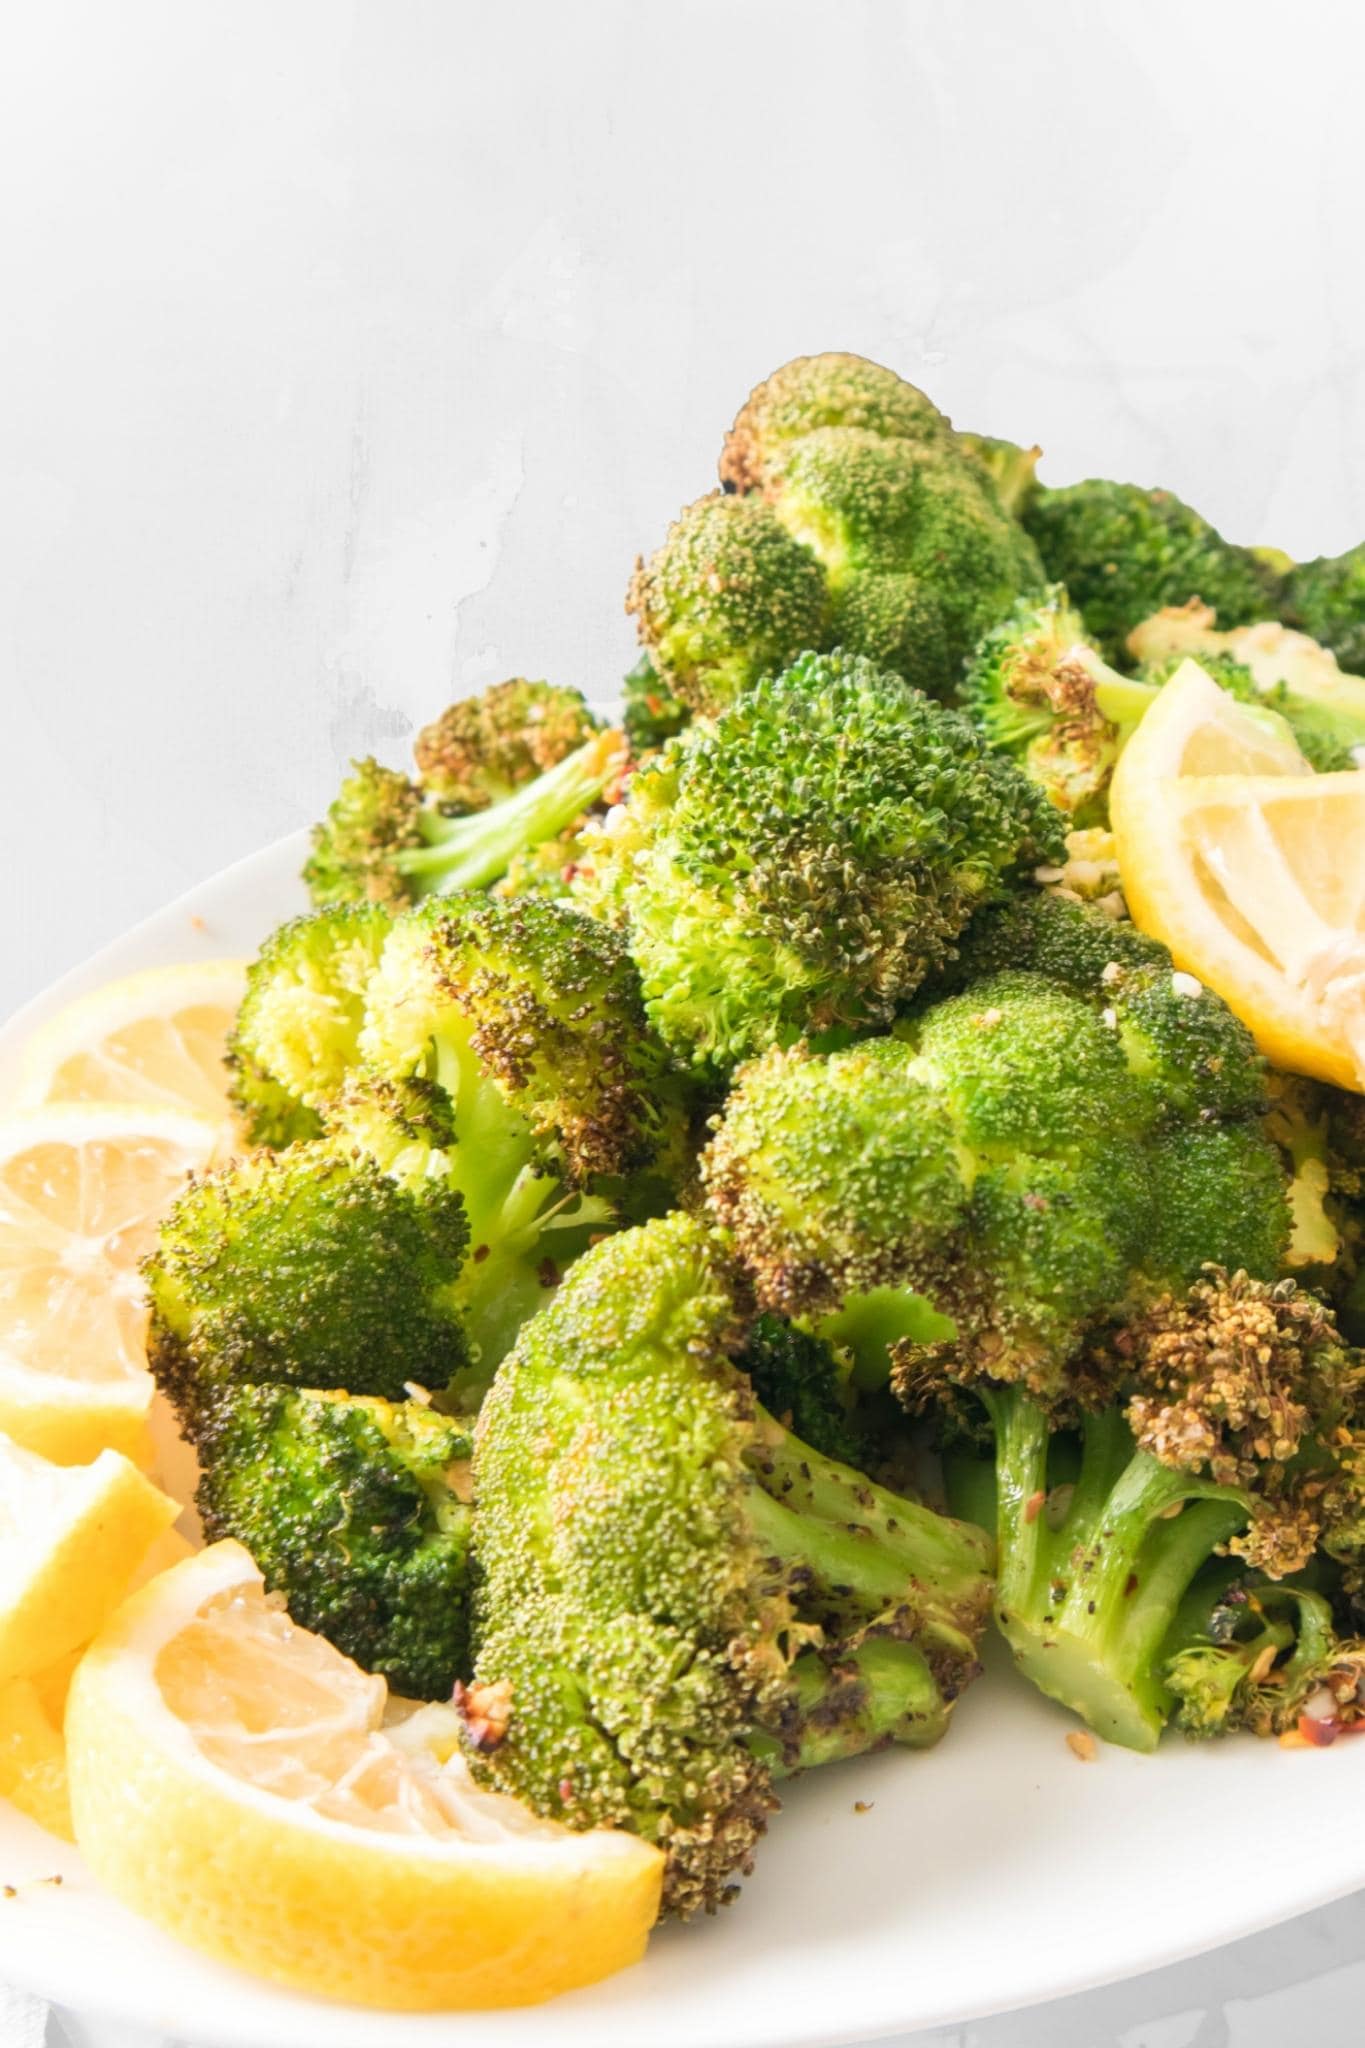 A serving platter of crispy air fryer garlic broccoli with lemon wedges.